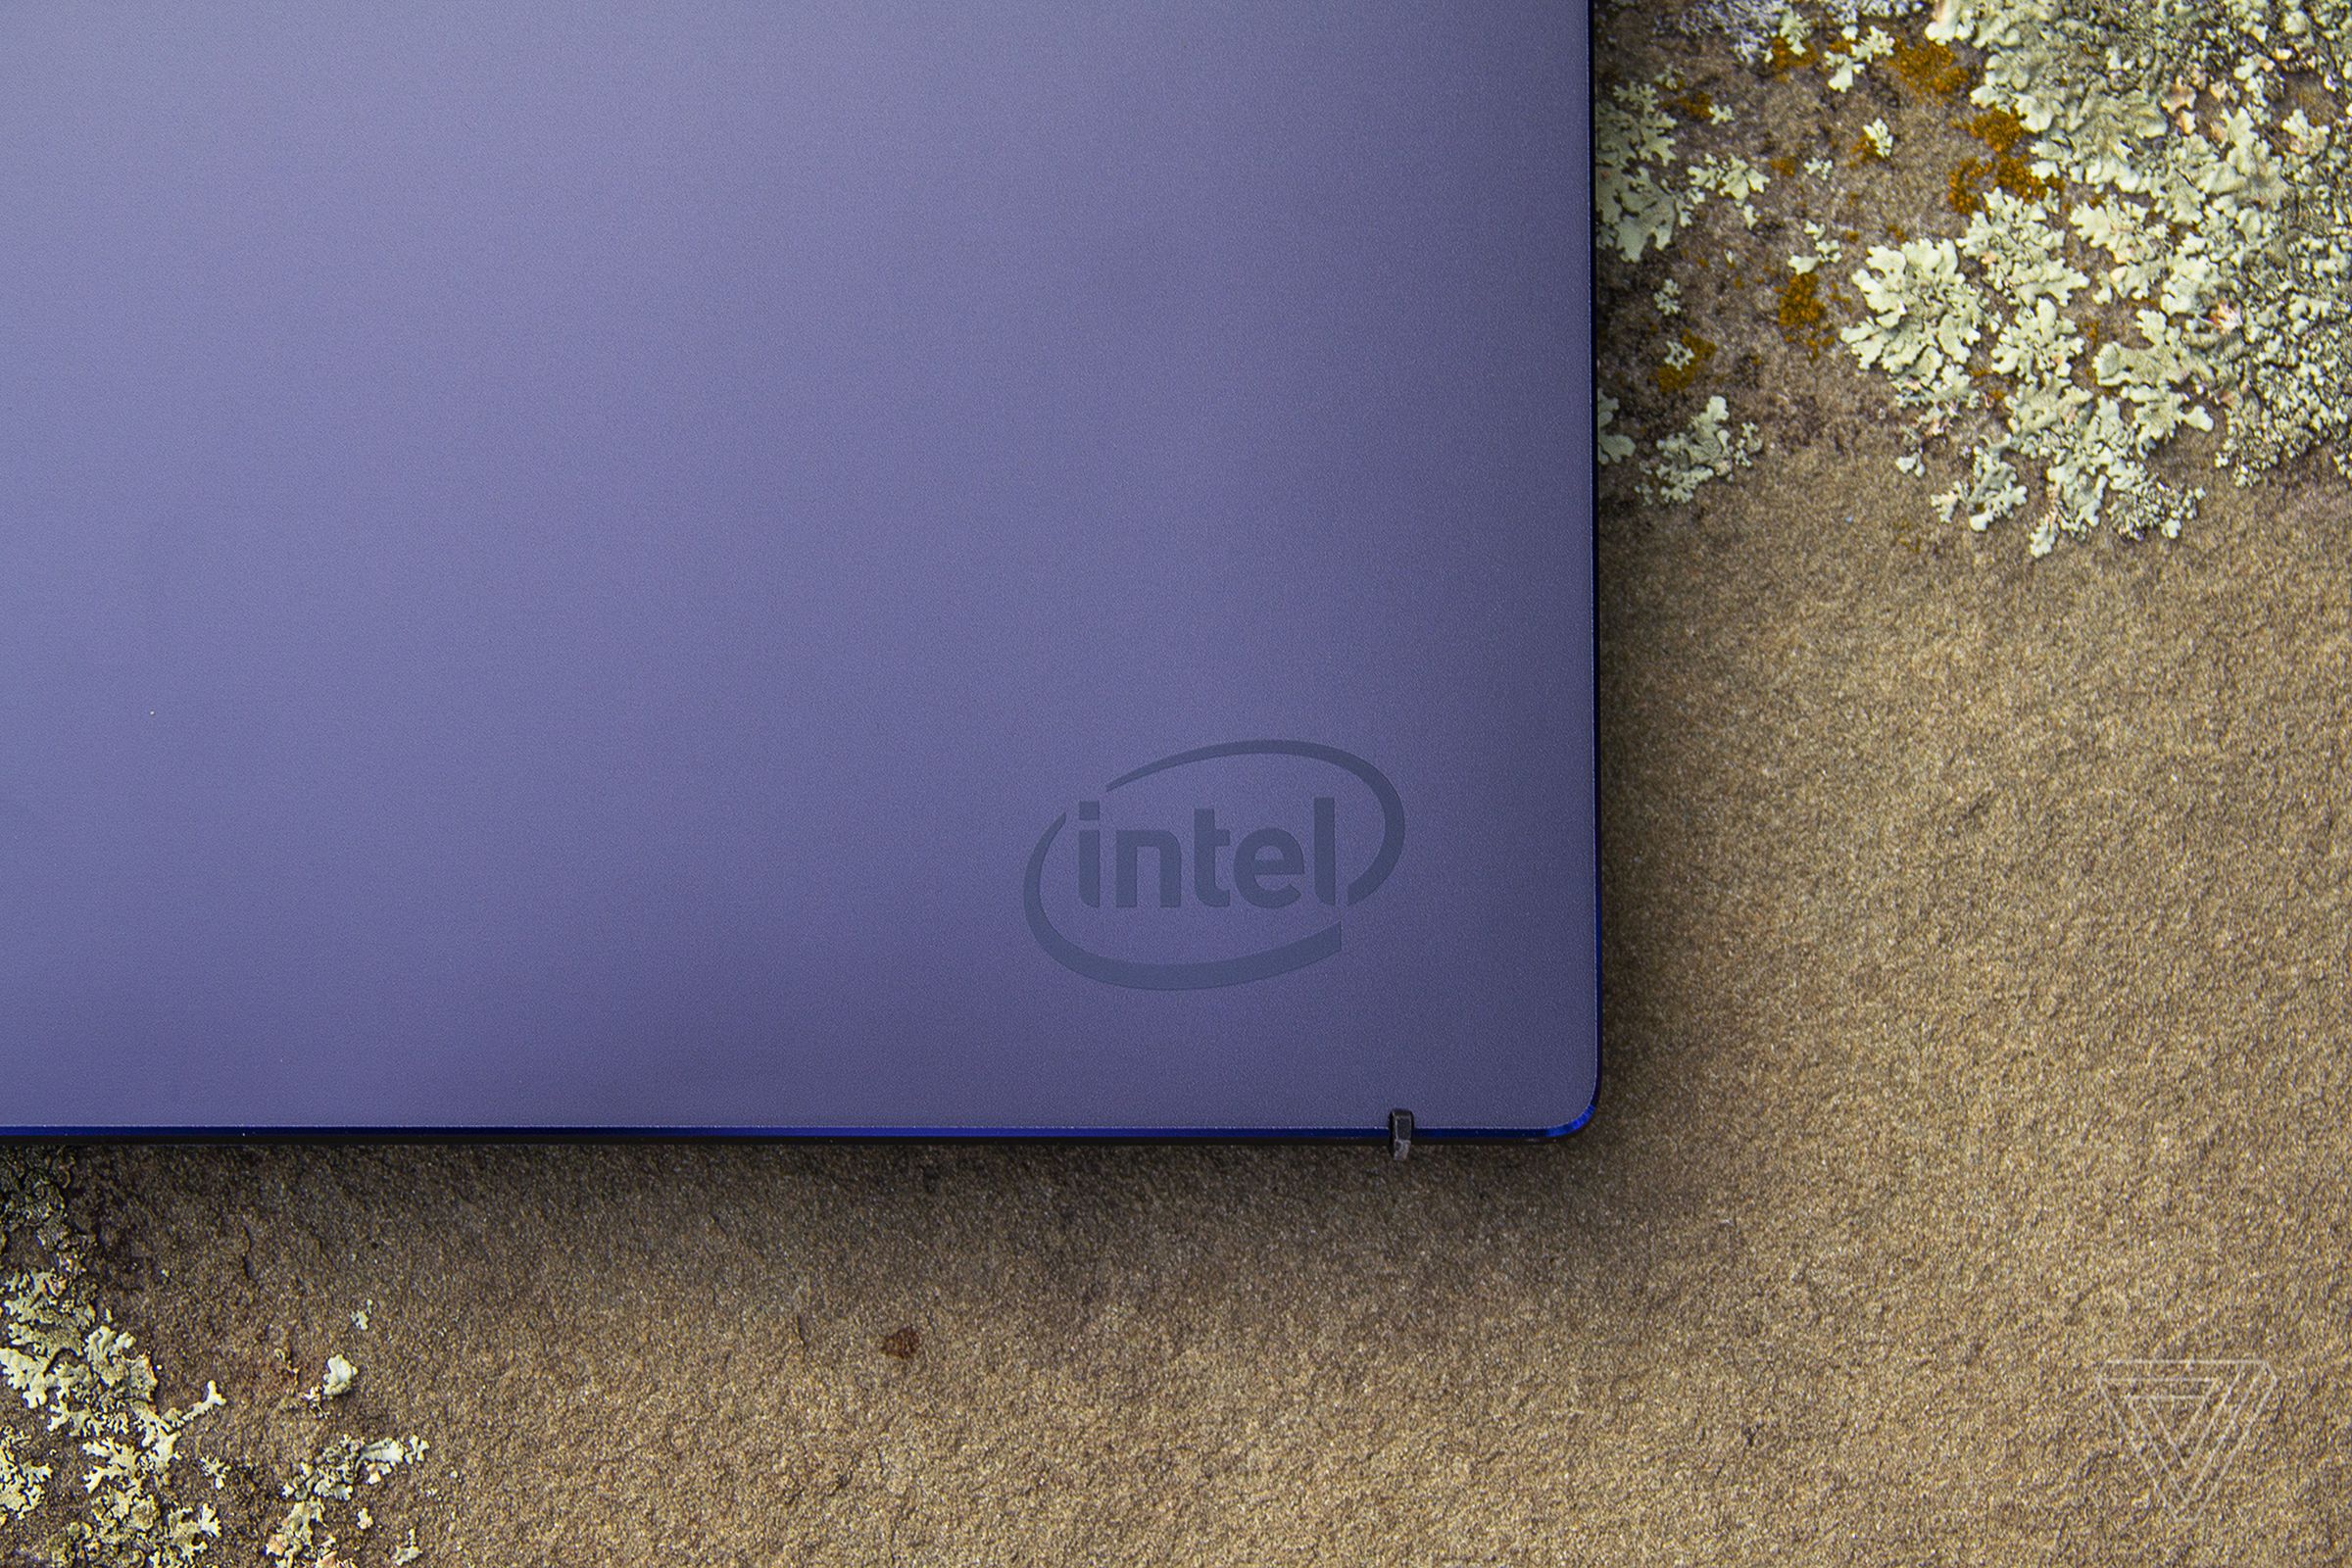 A corner of Intel’s Tiger Lake reference design, showing the Intel logo.